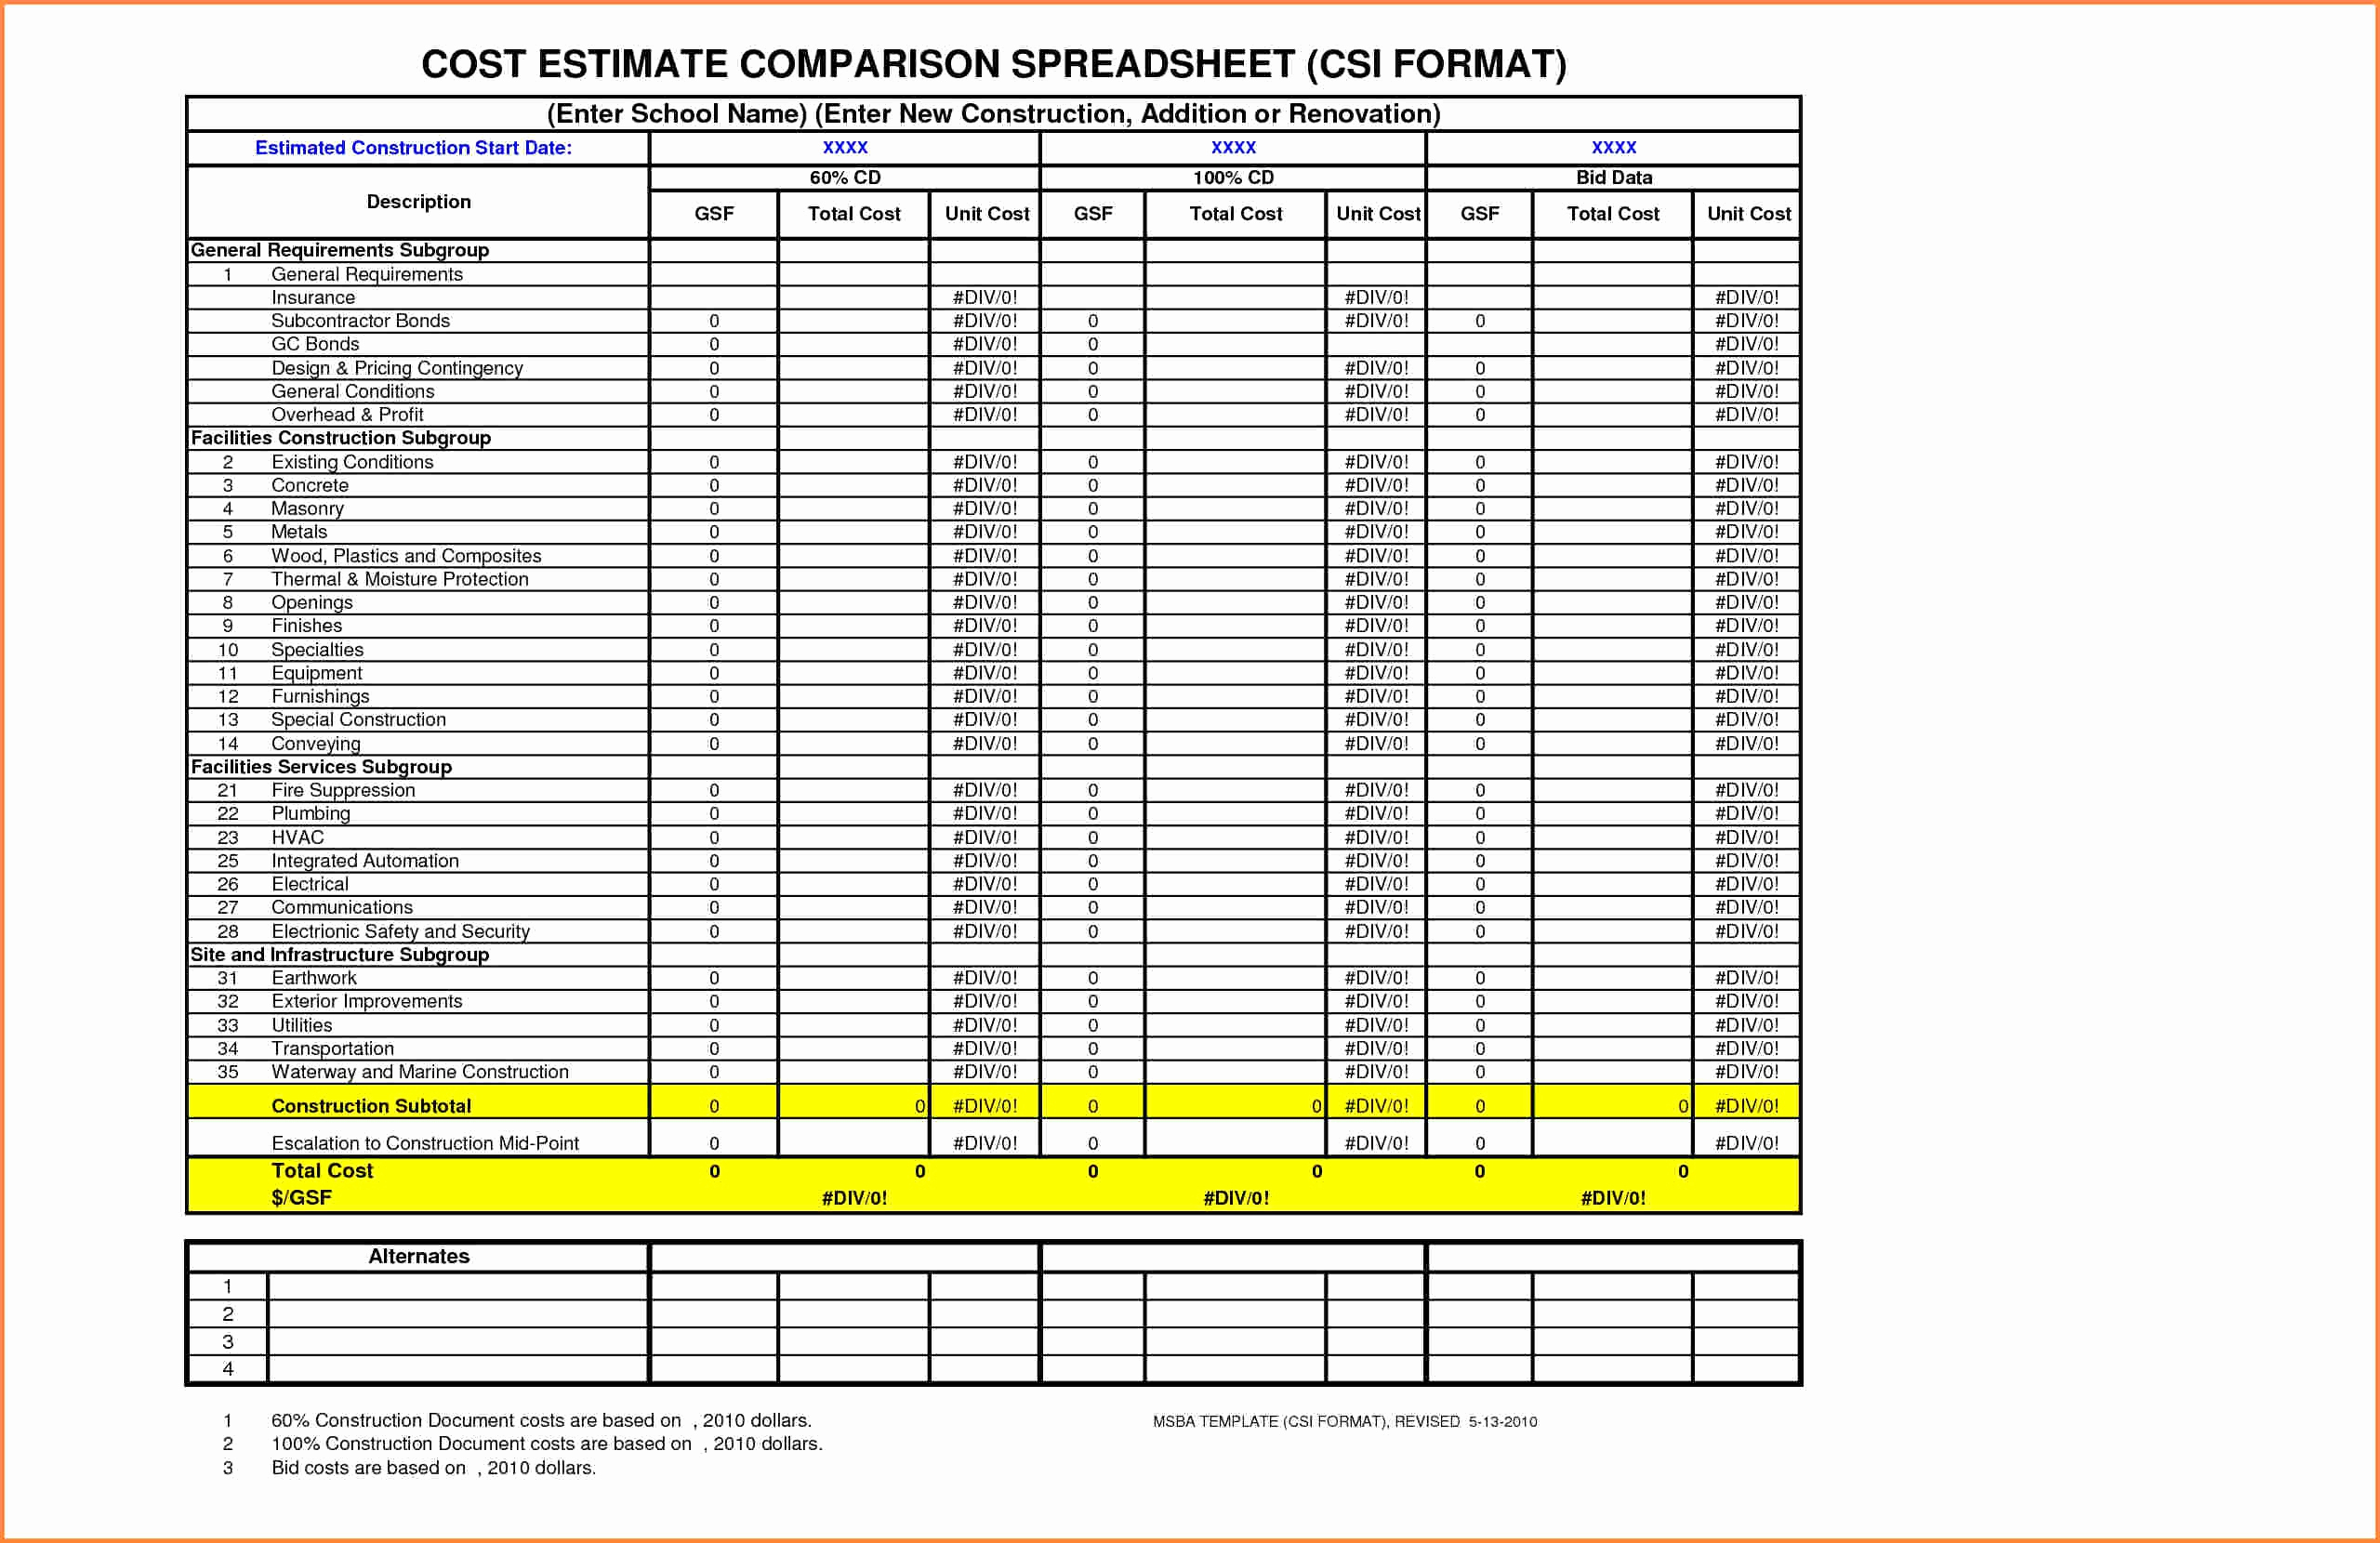 Liquor Cost Spreadsheet In Bar Inventory Spreadsheet Excel Luxury Liquor Cost Spreadsheet Excel